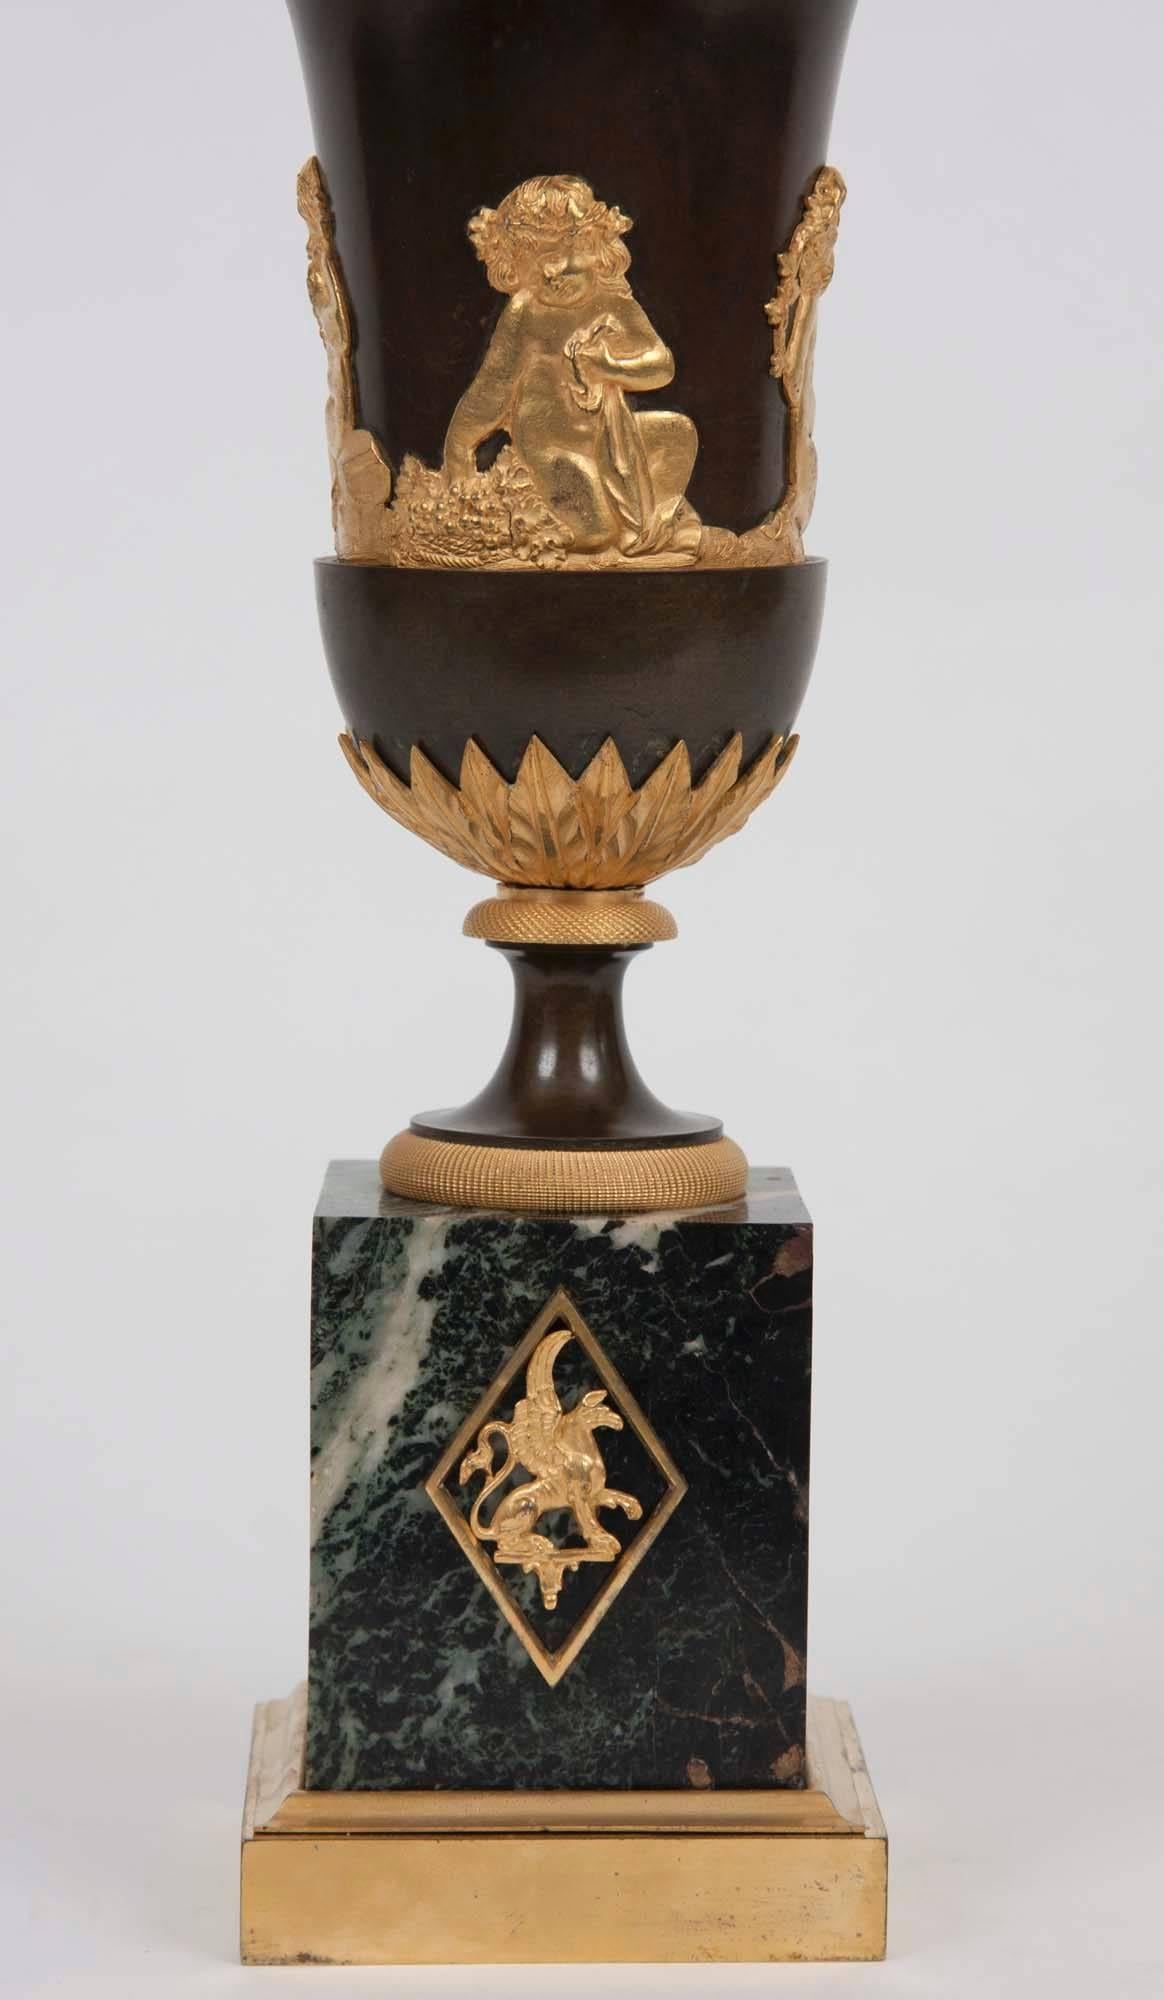 Pair of Directorie Gilt Bronze-Mounted Urns (Vergoldet)